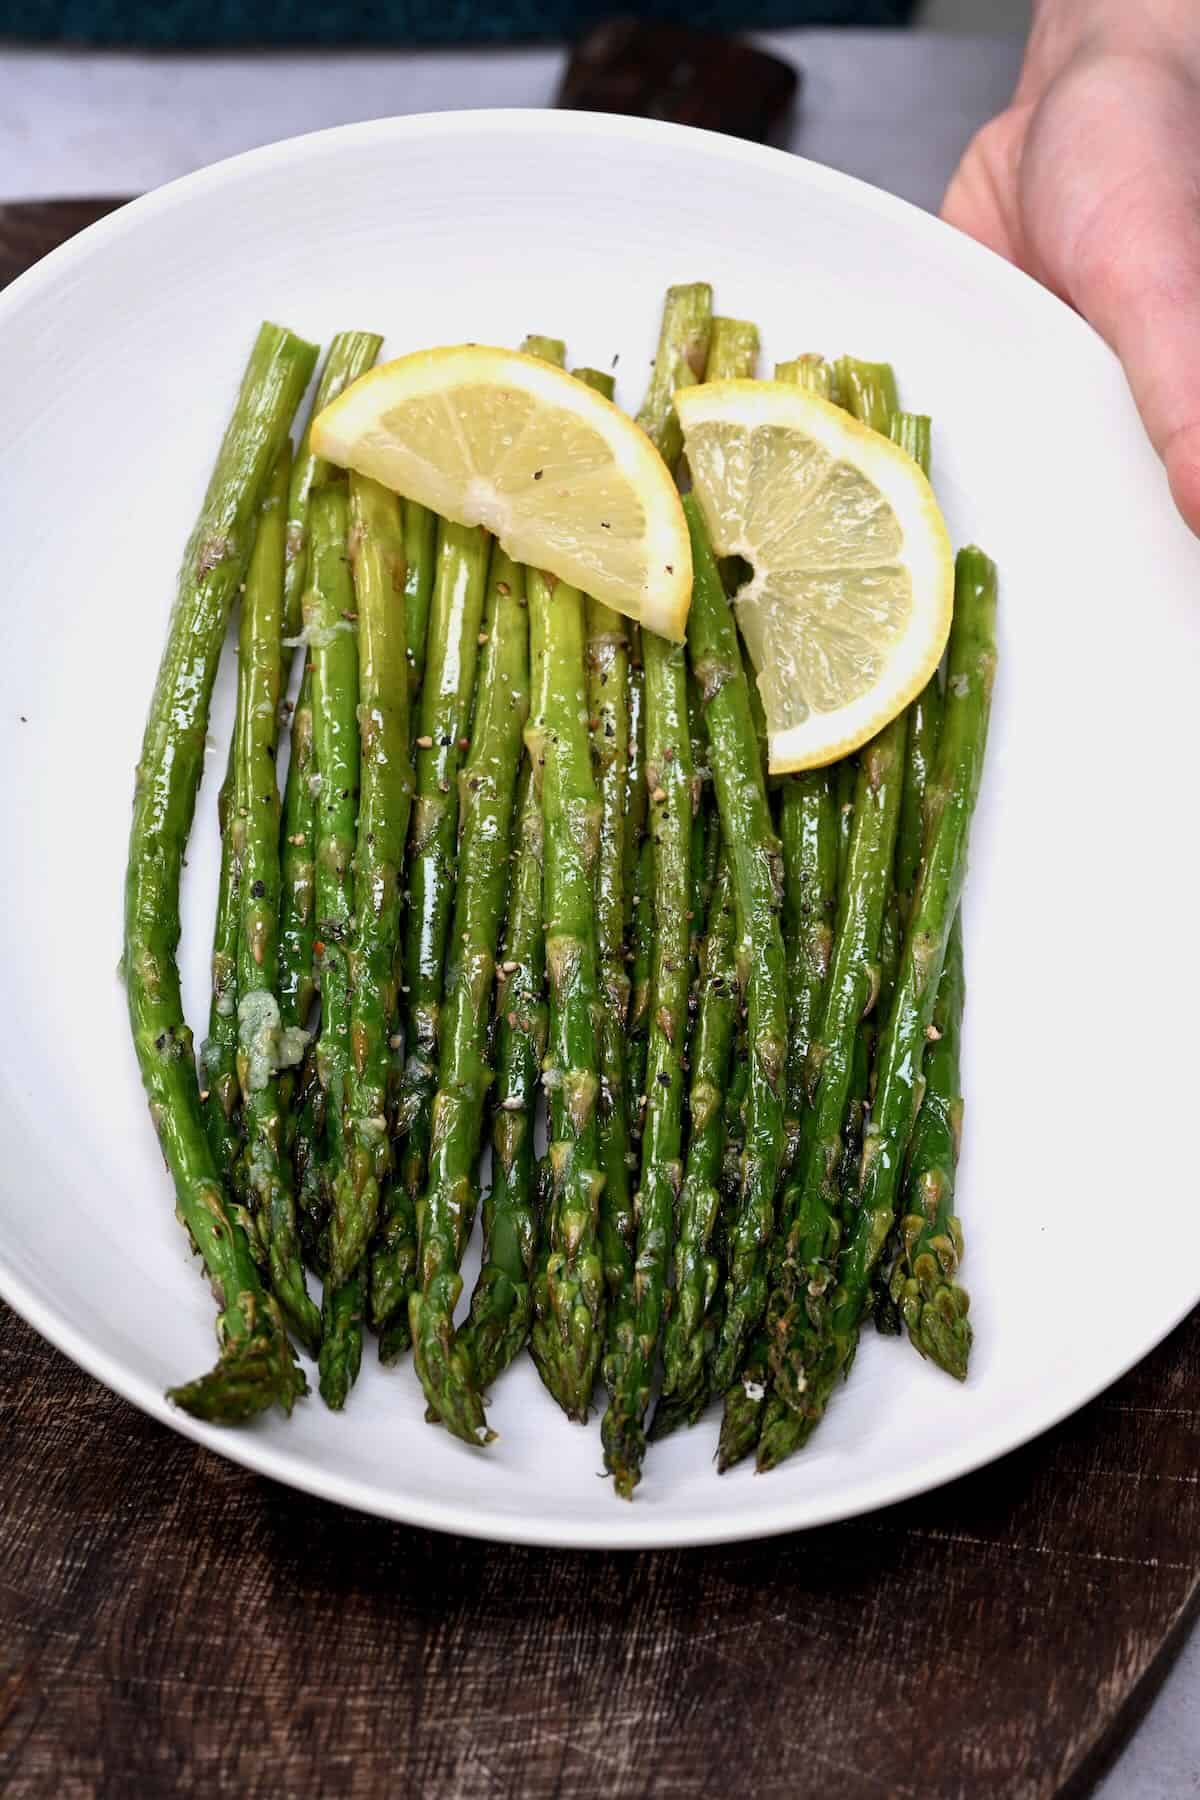 A serving of air fried asparagus